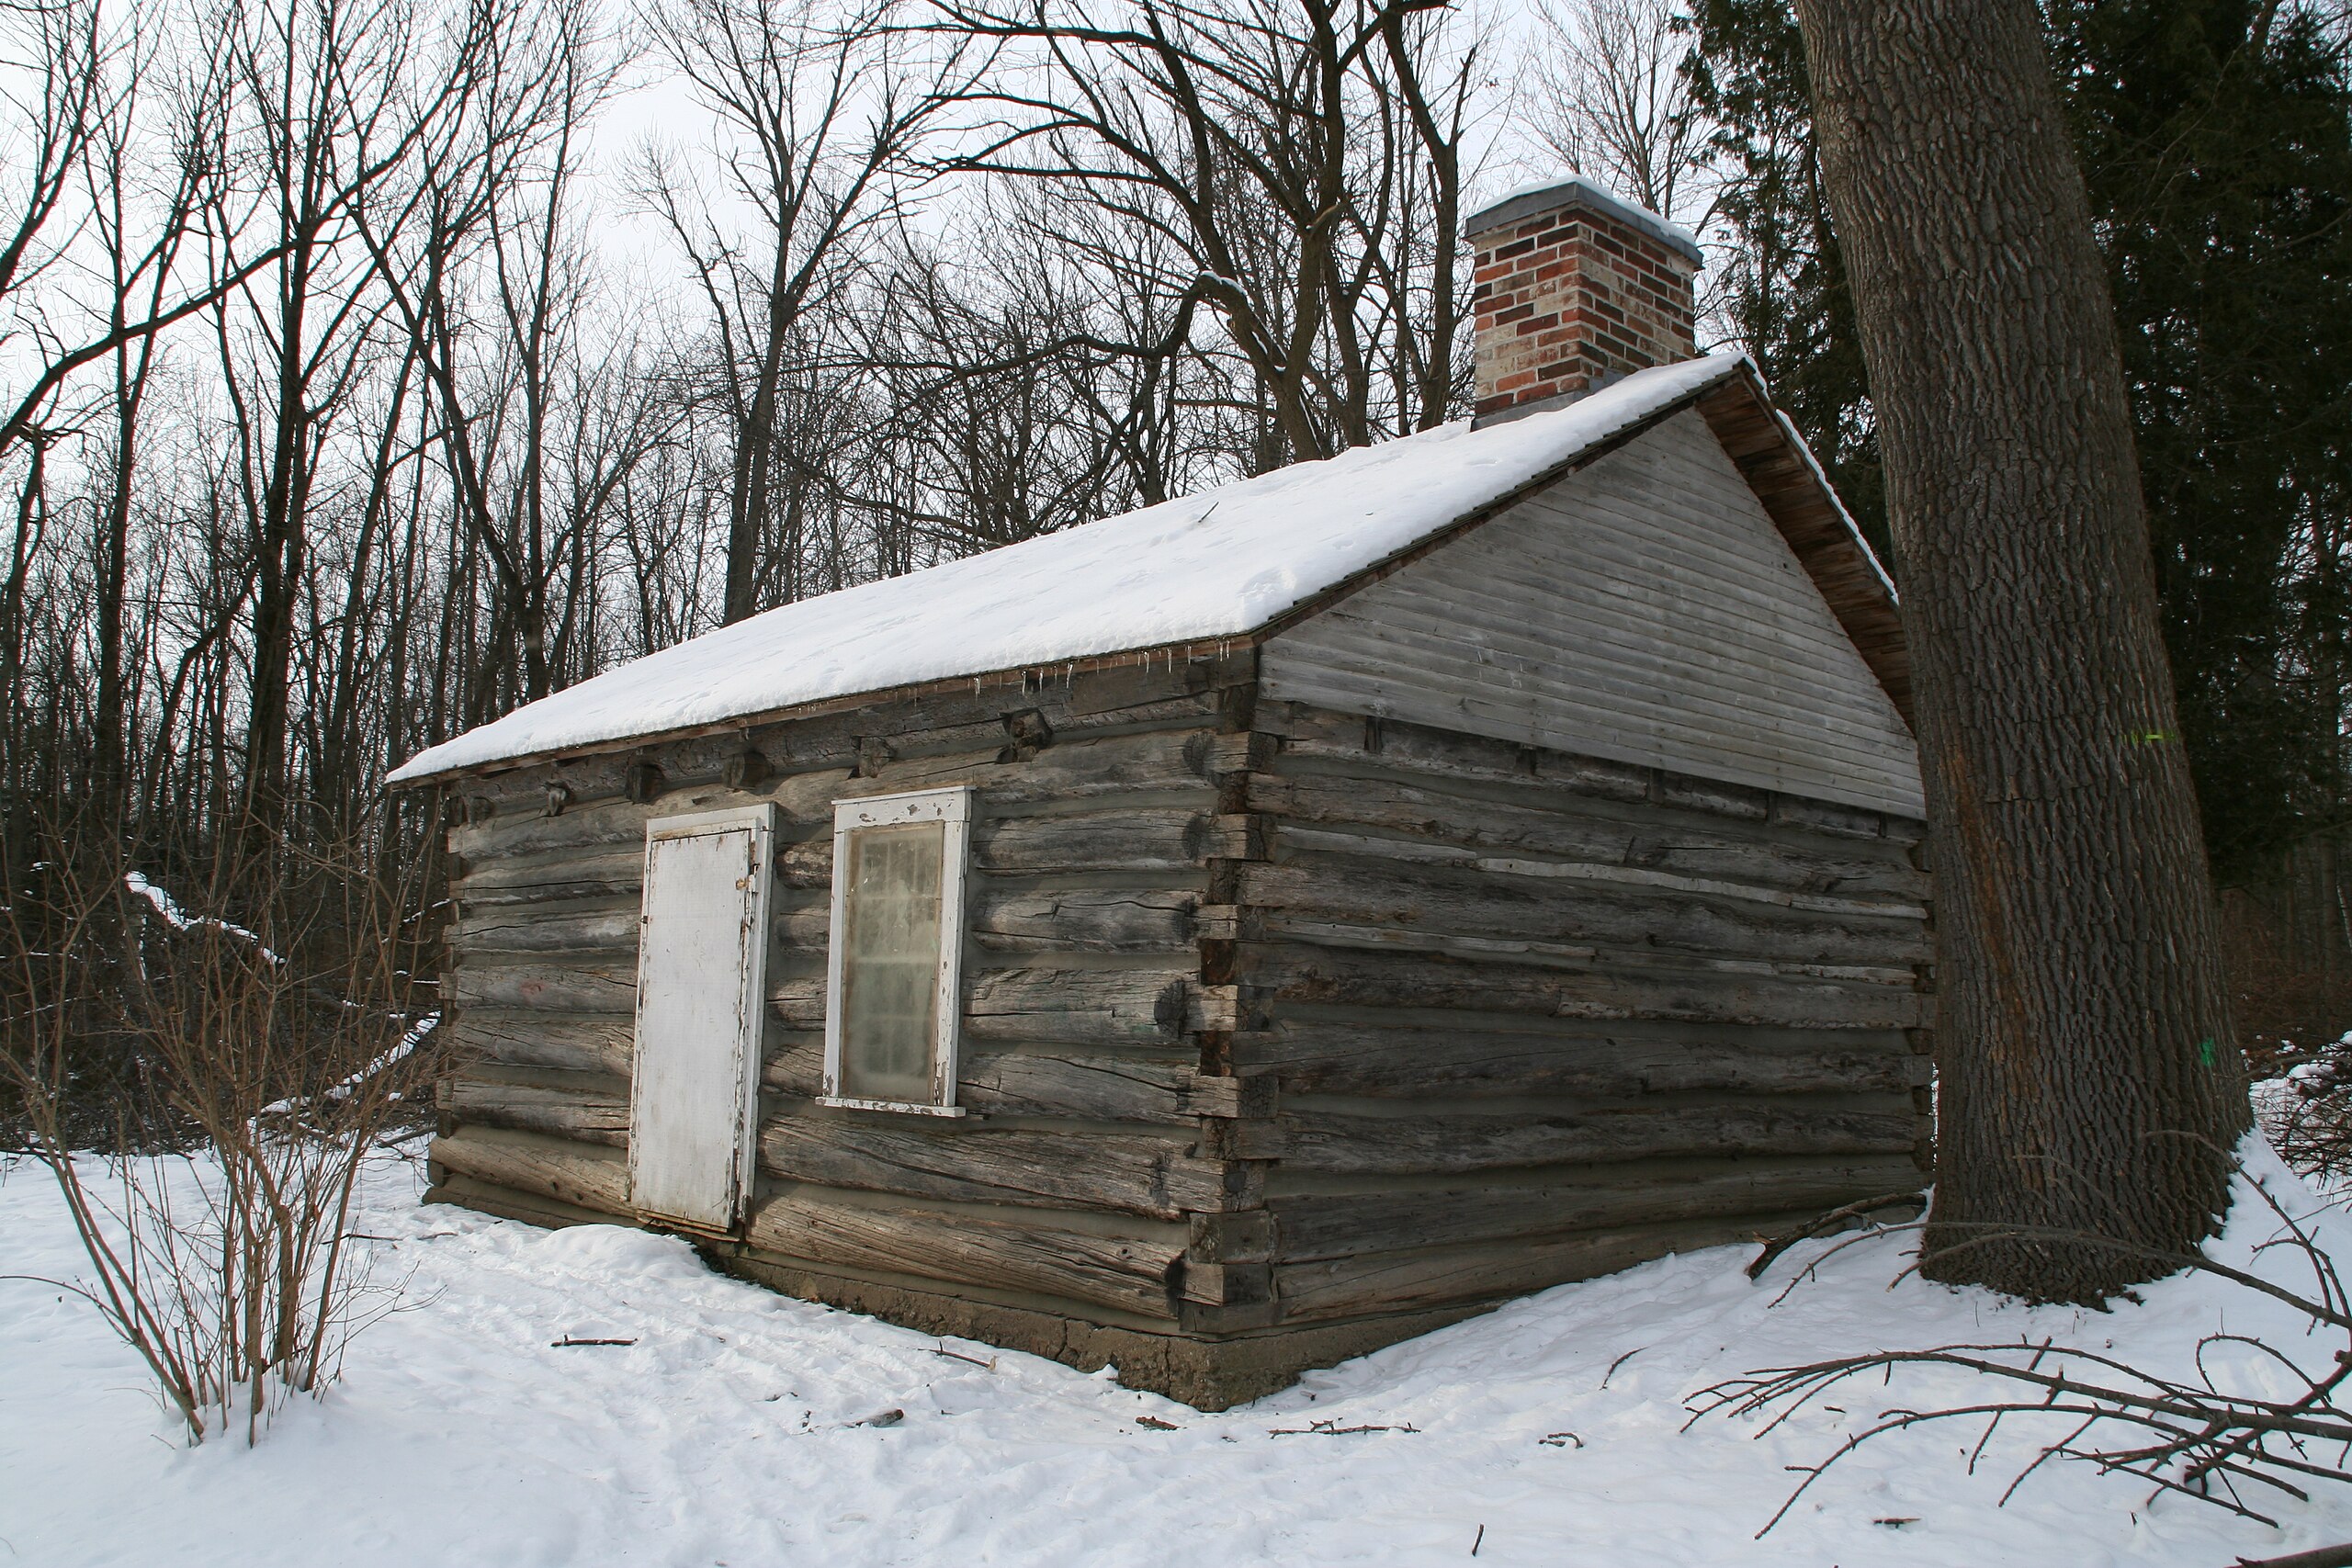 Osterhout Log Cabin - Wikipedia